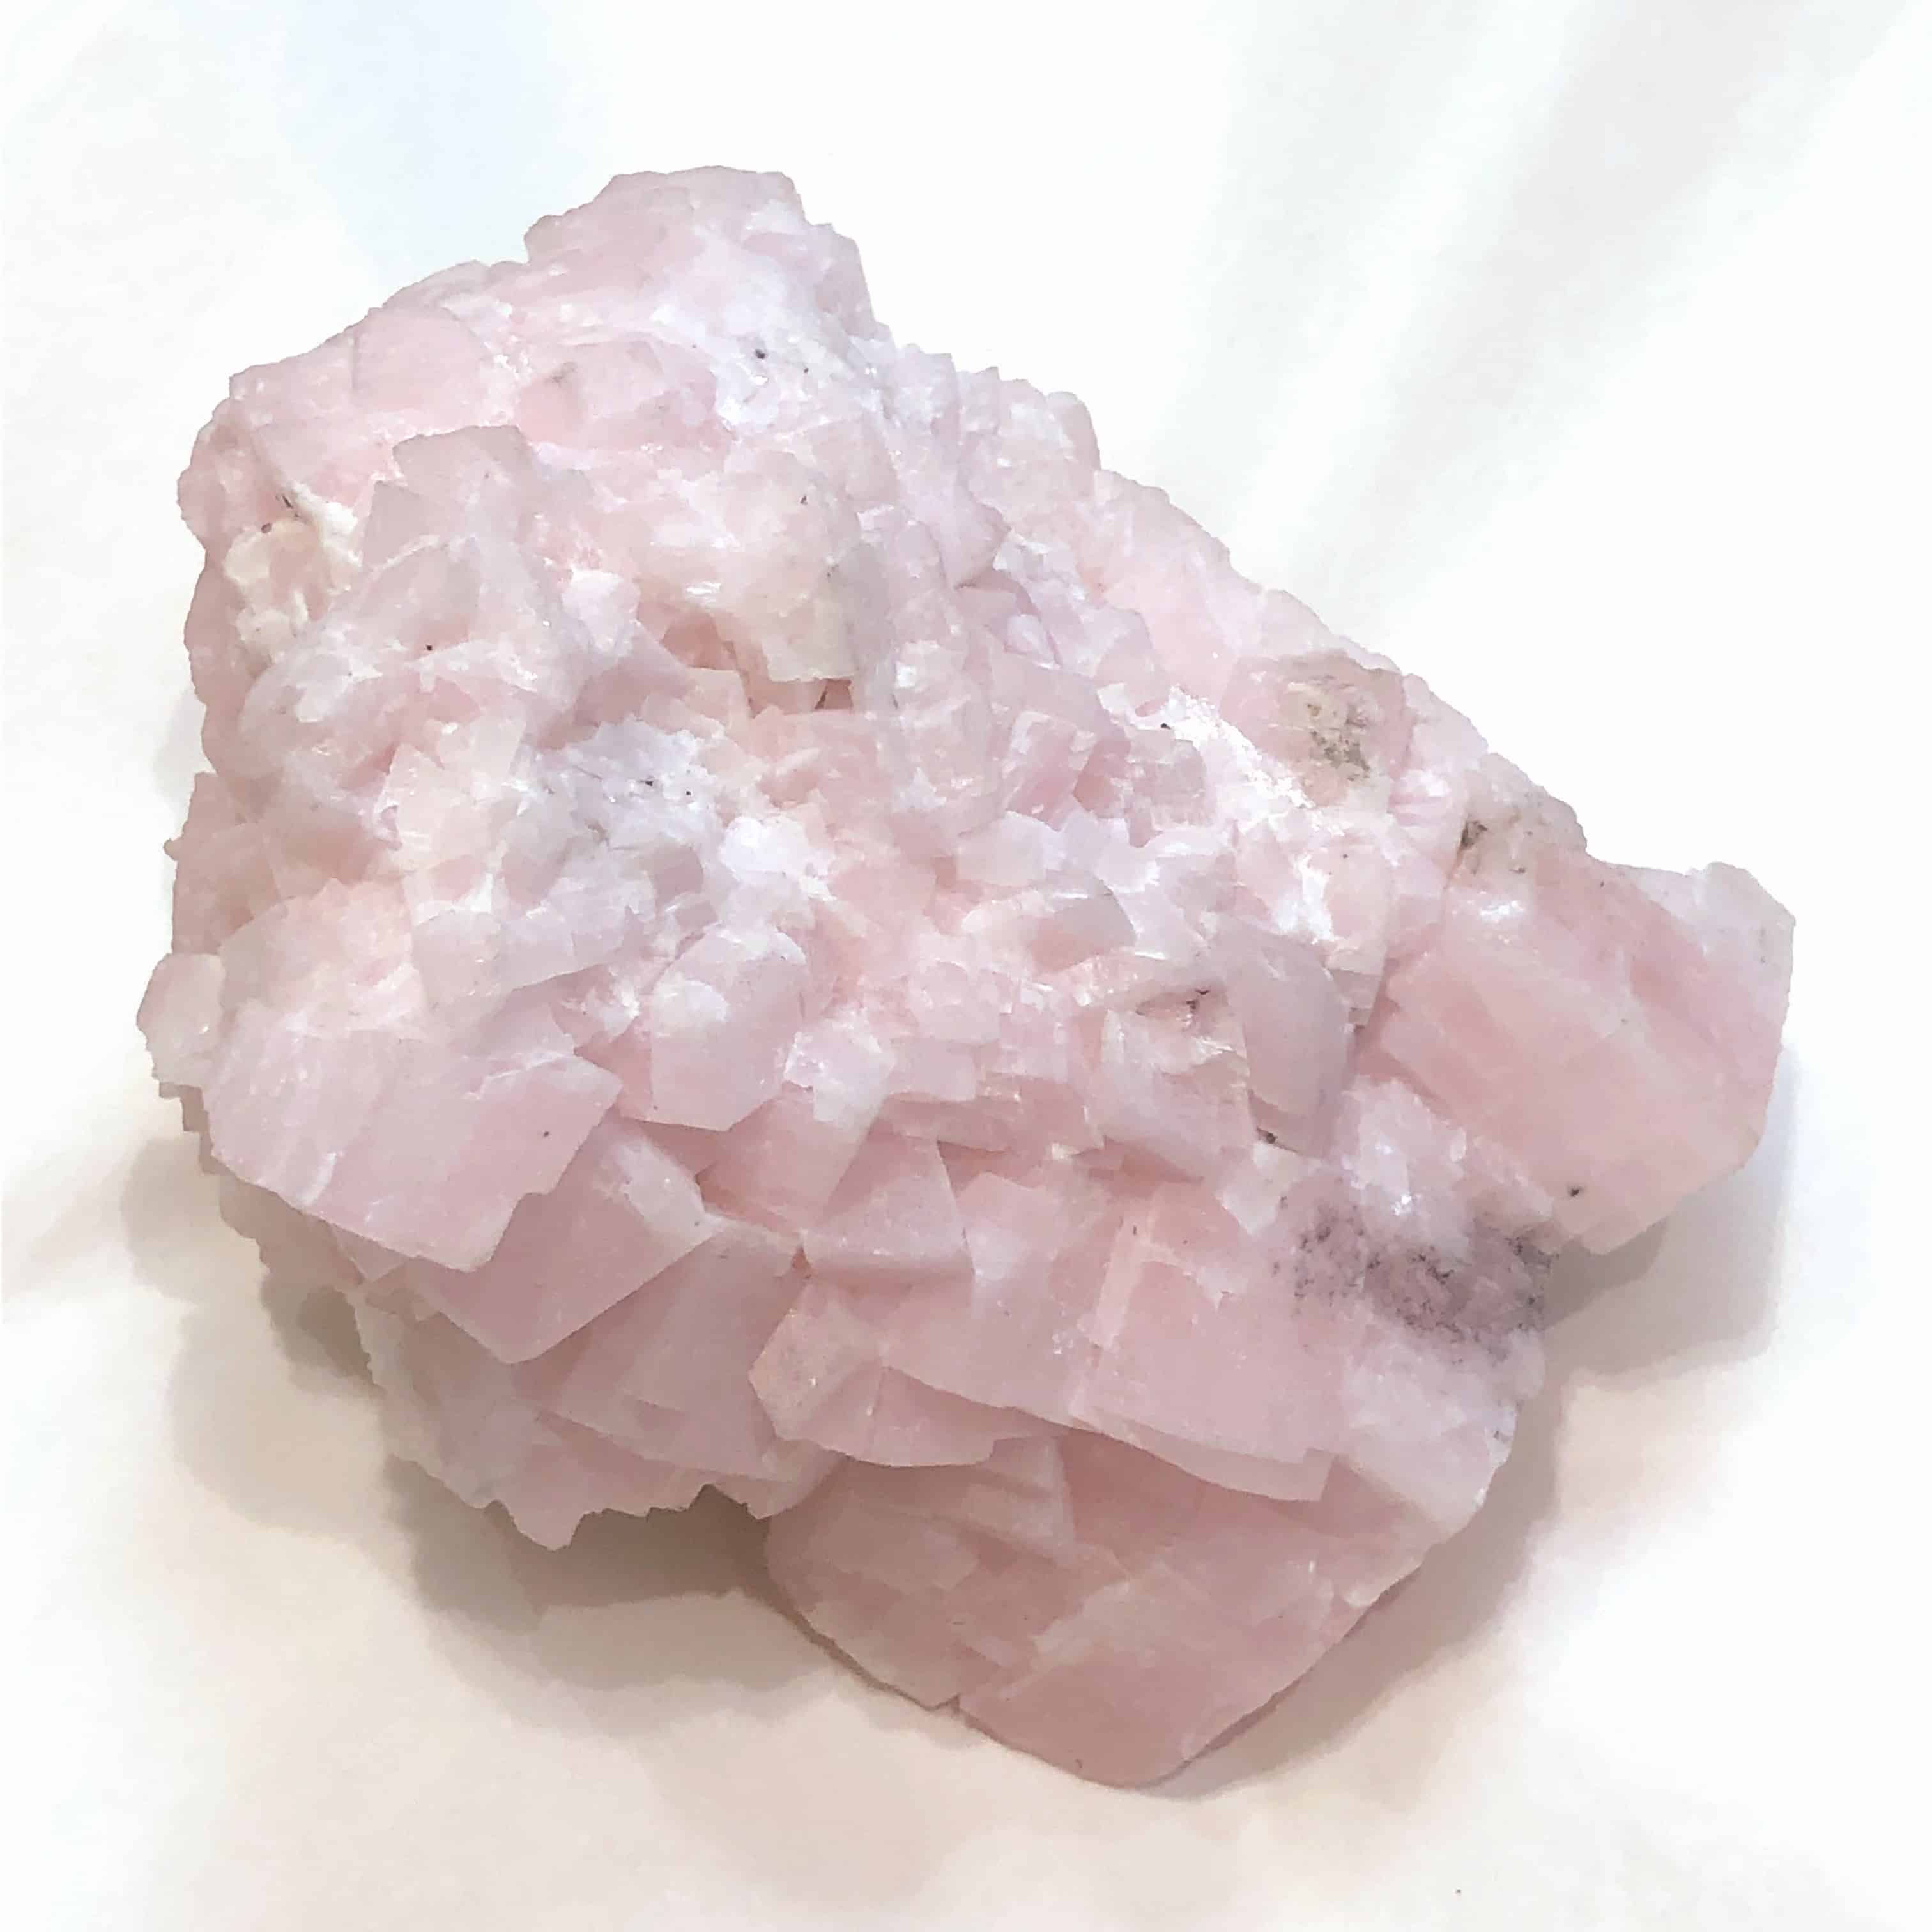 Mangano Calcite Ghost \u2013 Ghost shaped Crystal \u2013 Pink calcite ghost shape